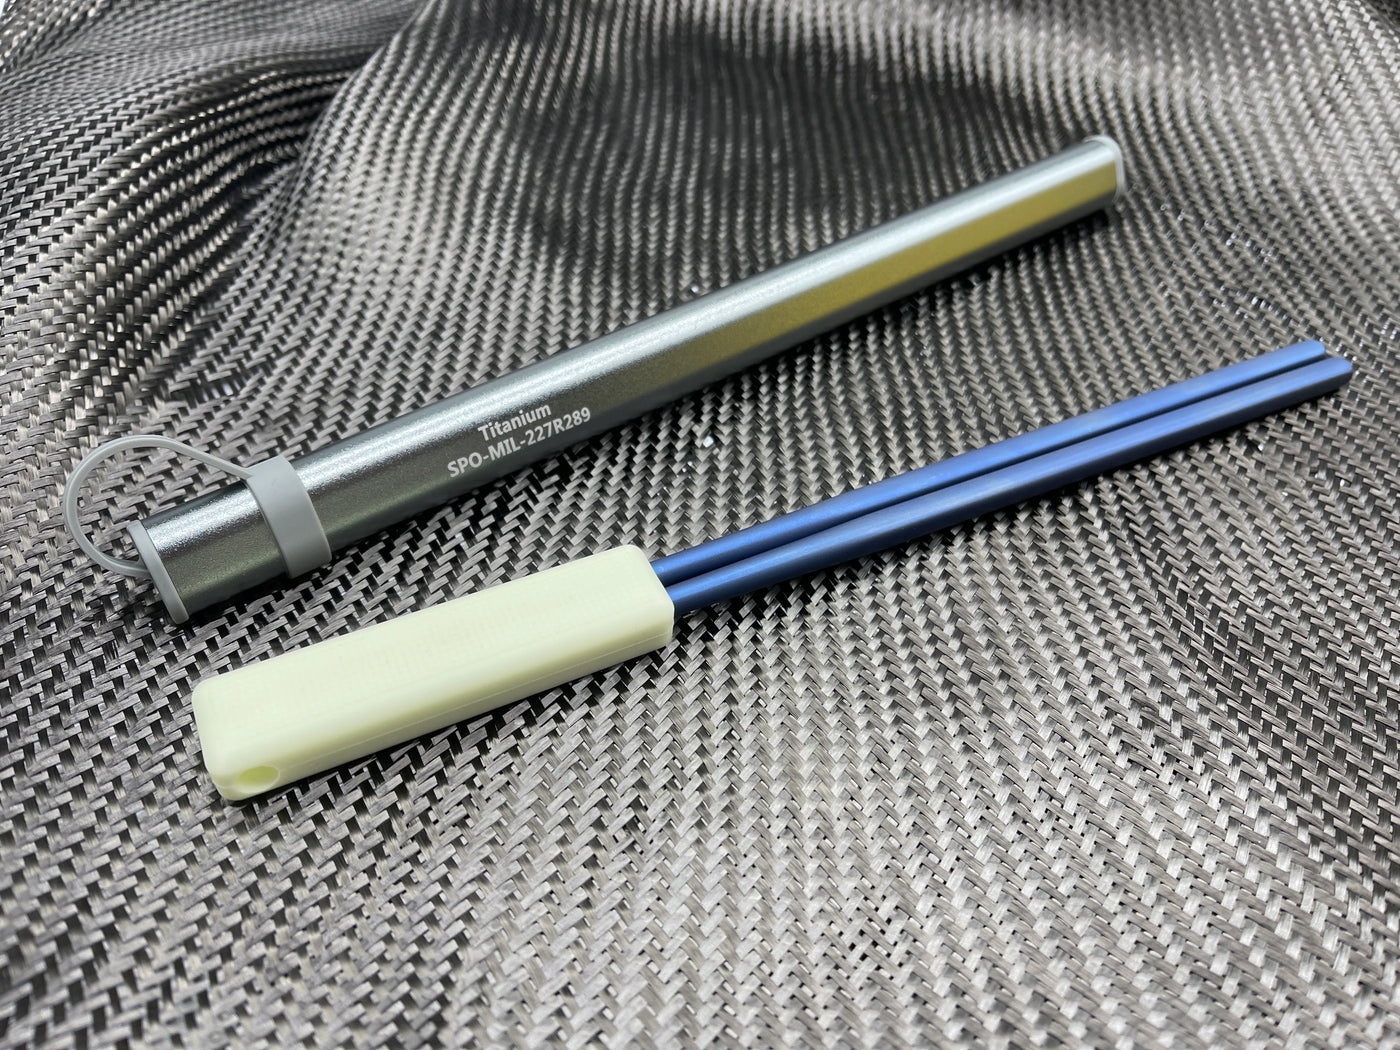 Countycomm - Blue Robusto Titanium Chopsticks Kit - Gen 6